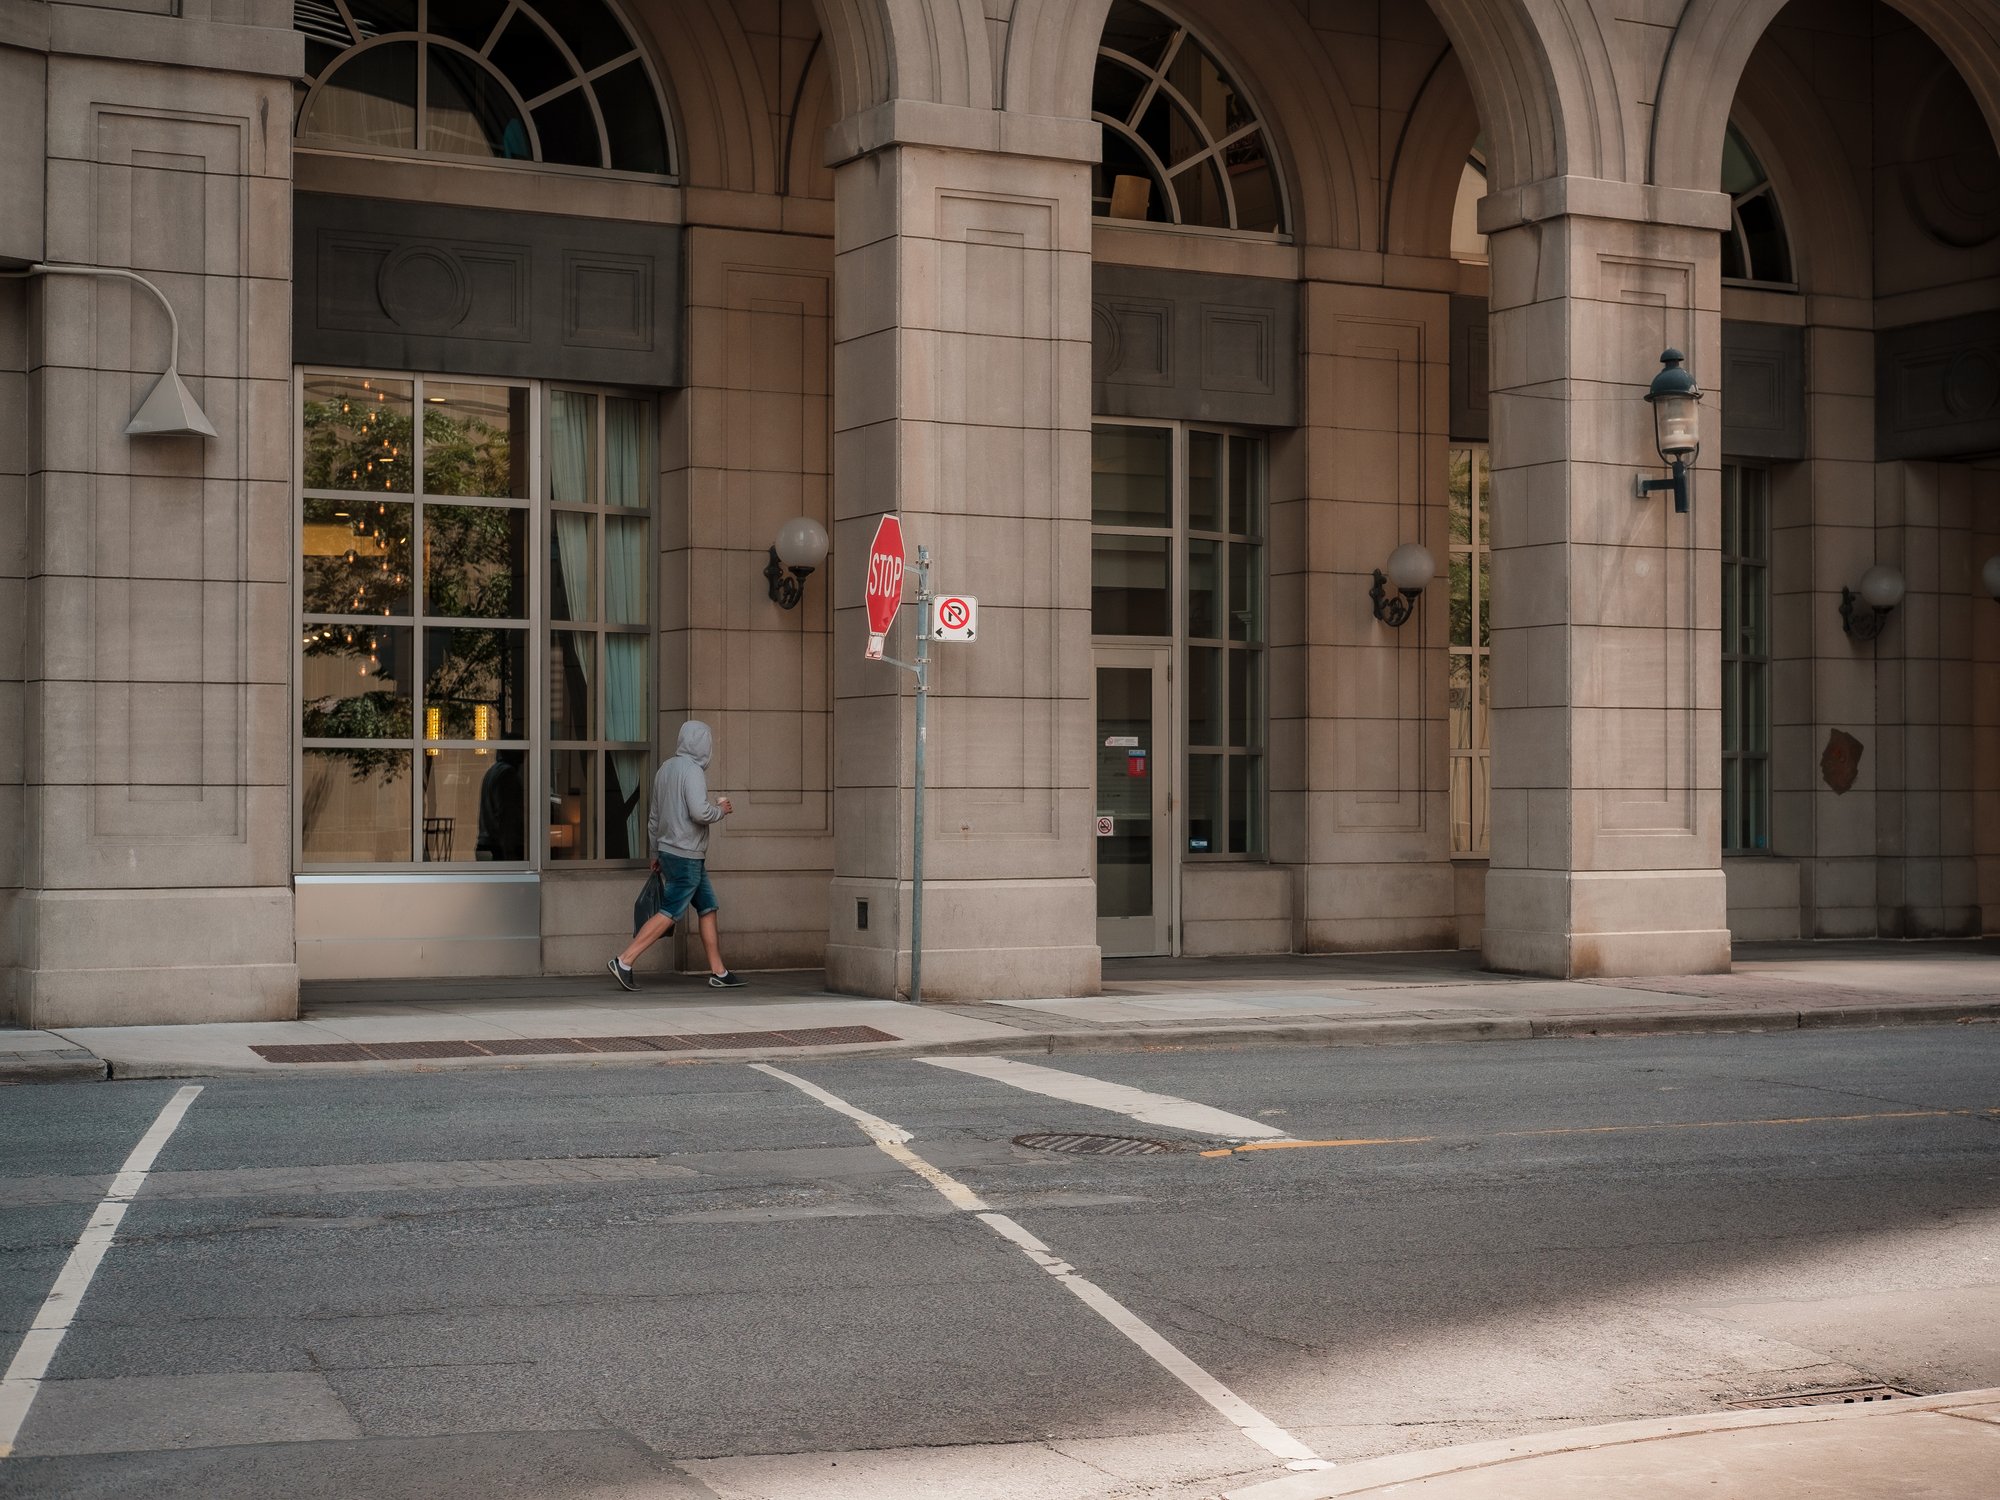 person walking under a city building with tall archways 在高拱的城市建筑下行走的人